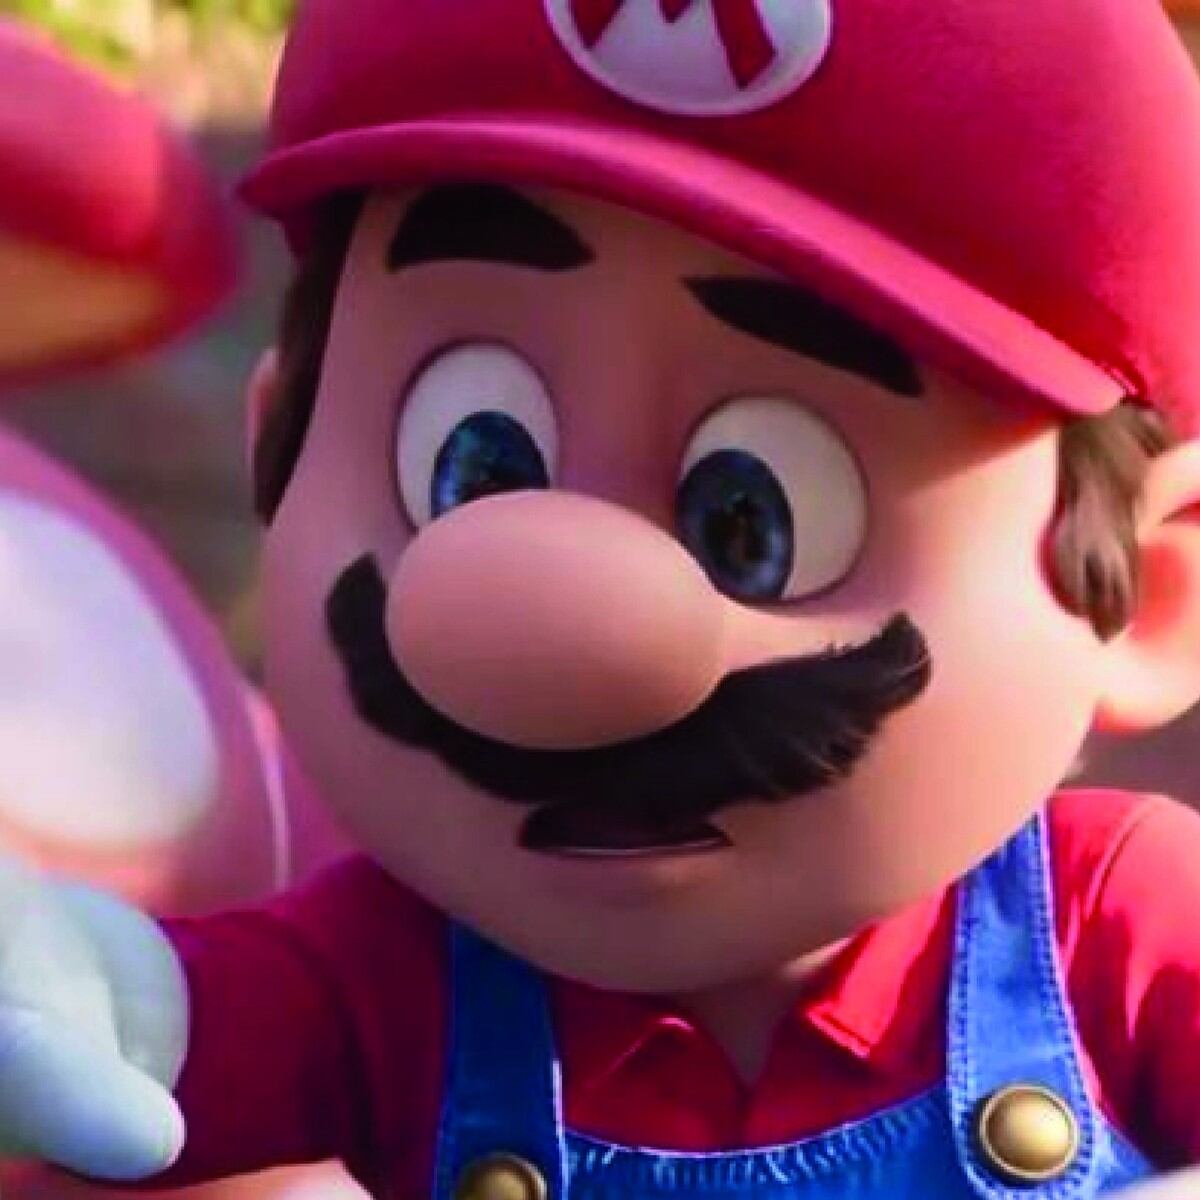 Gorra roja M usada por Mario (Chris Pratt) como se ve en The